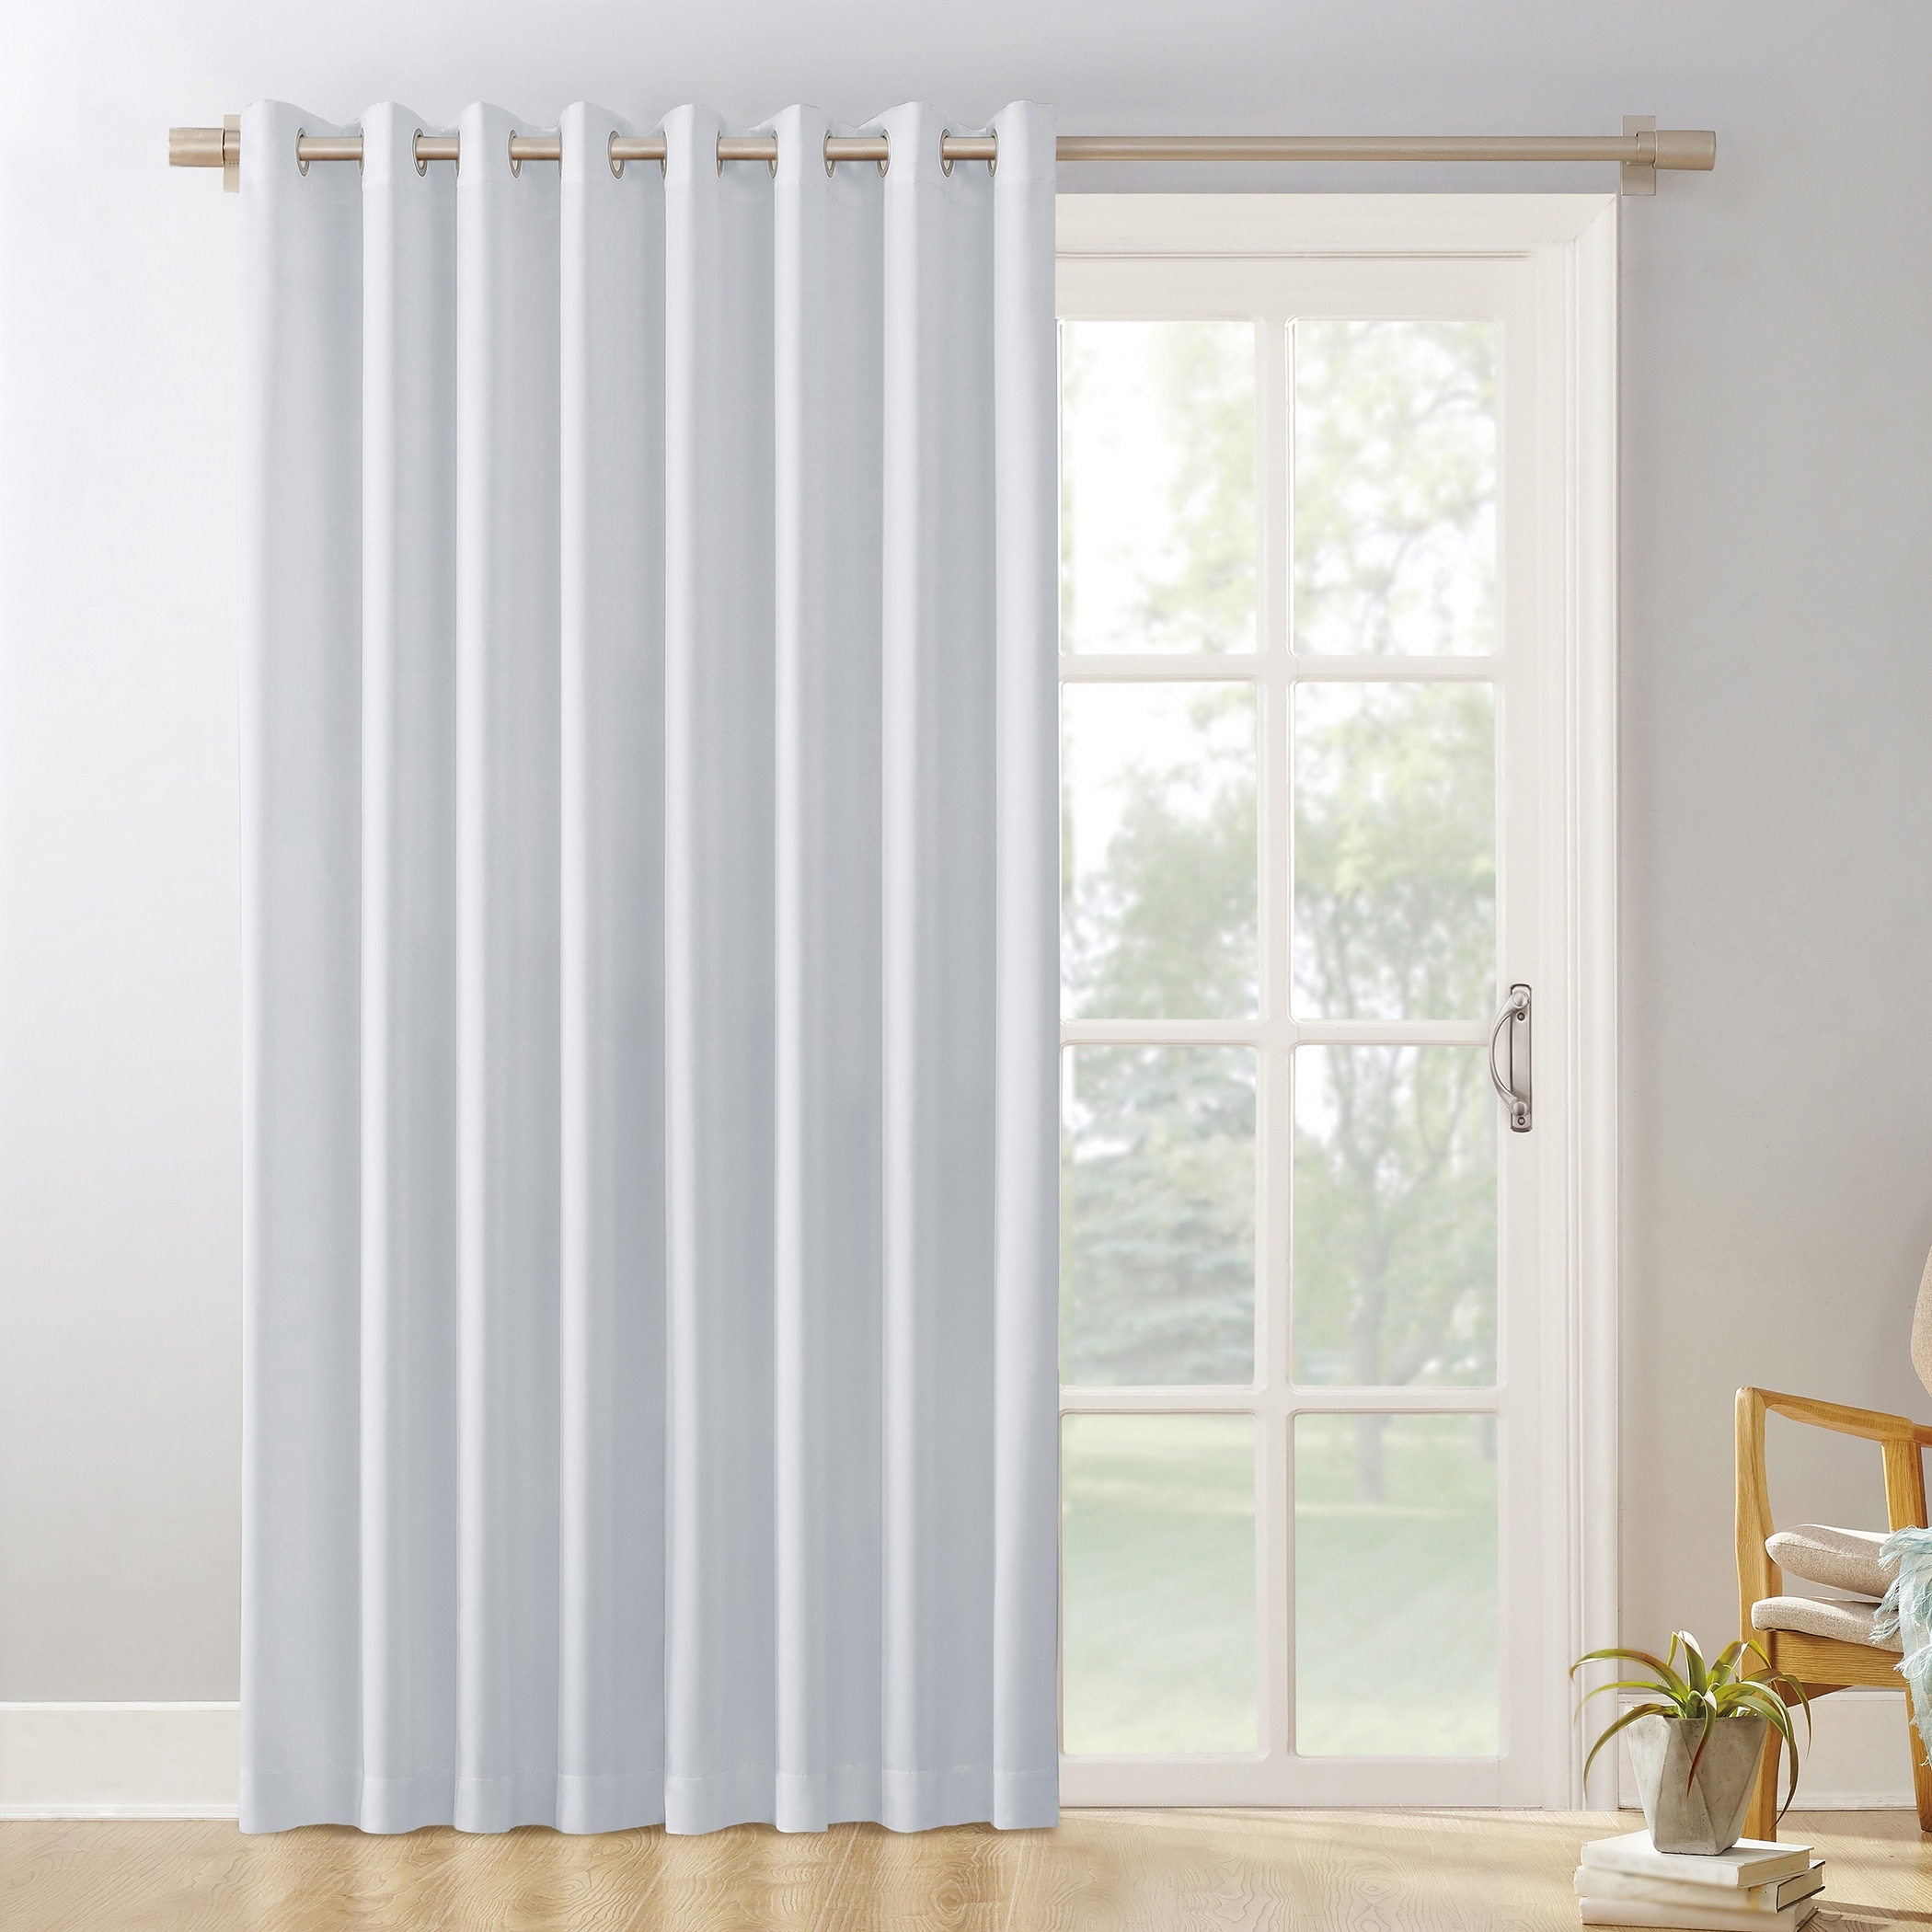 Sun Zero Barrow Extra-Wide Energy Efficient Sliding Patio Door Curtain Panel x